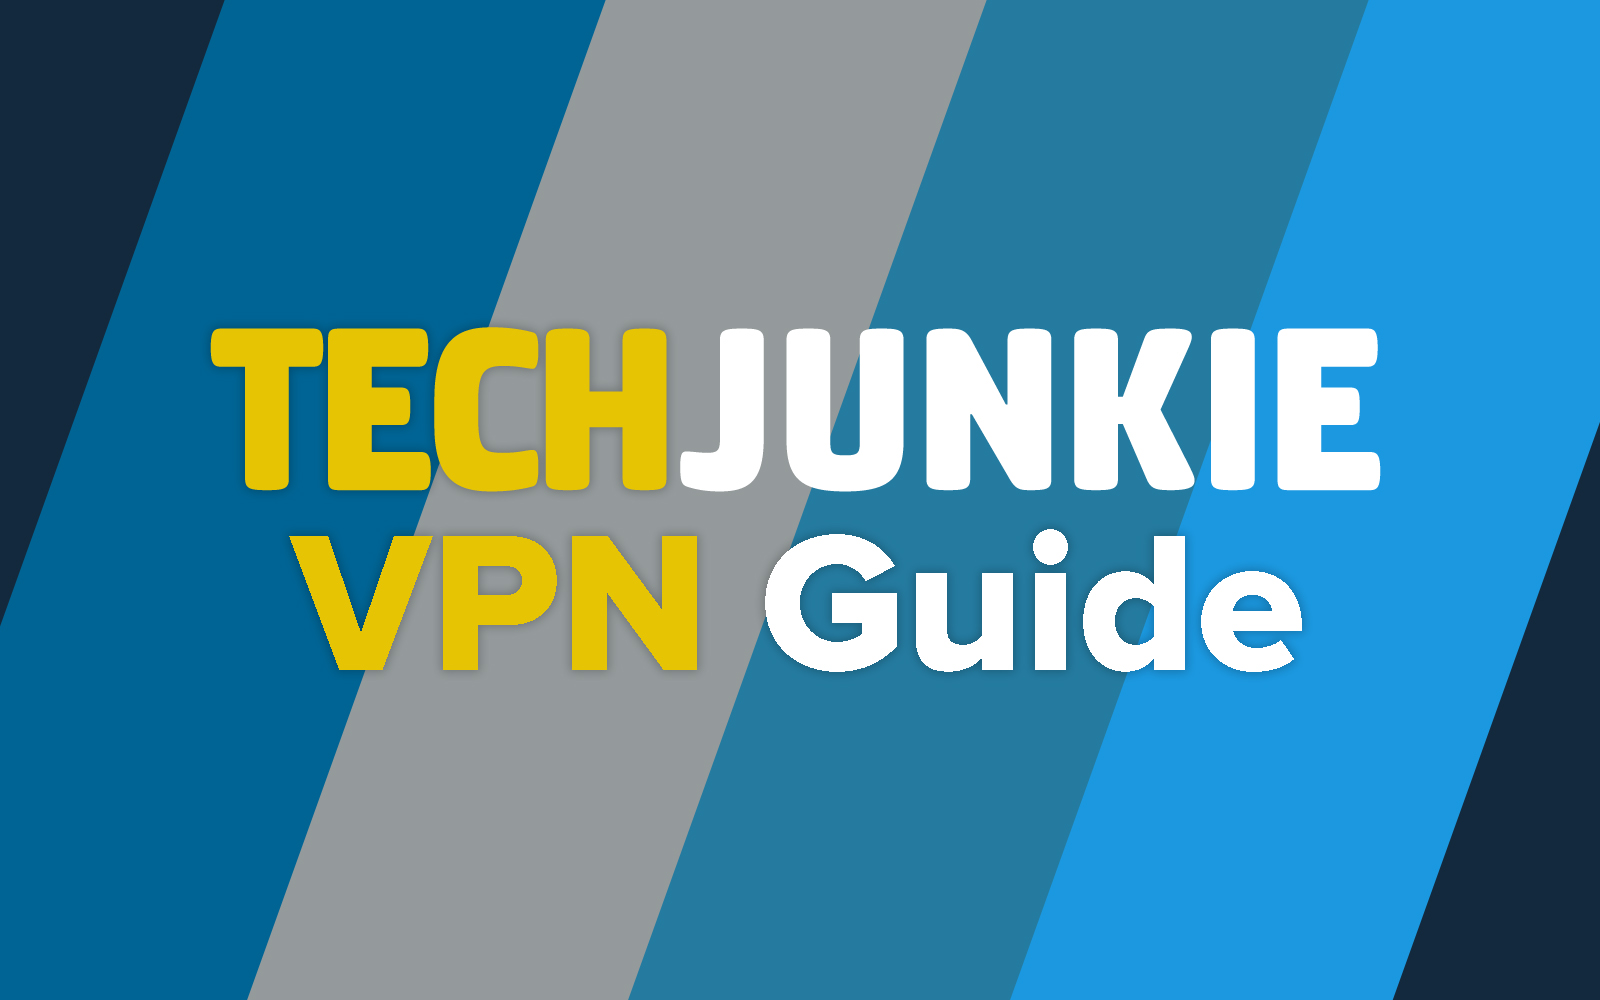 Our TechJunkie VPN Review Process